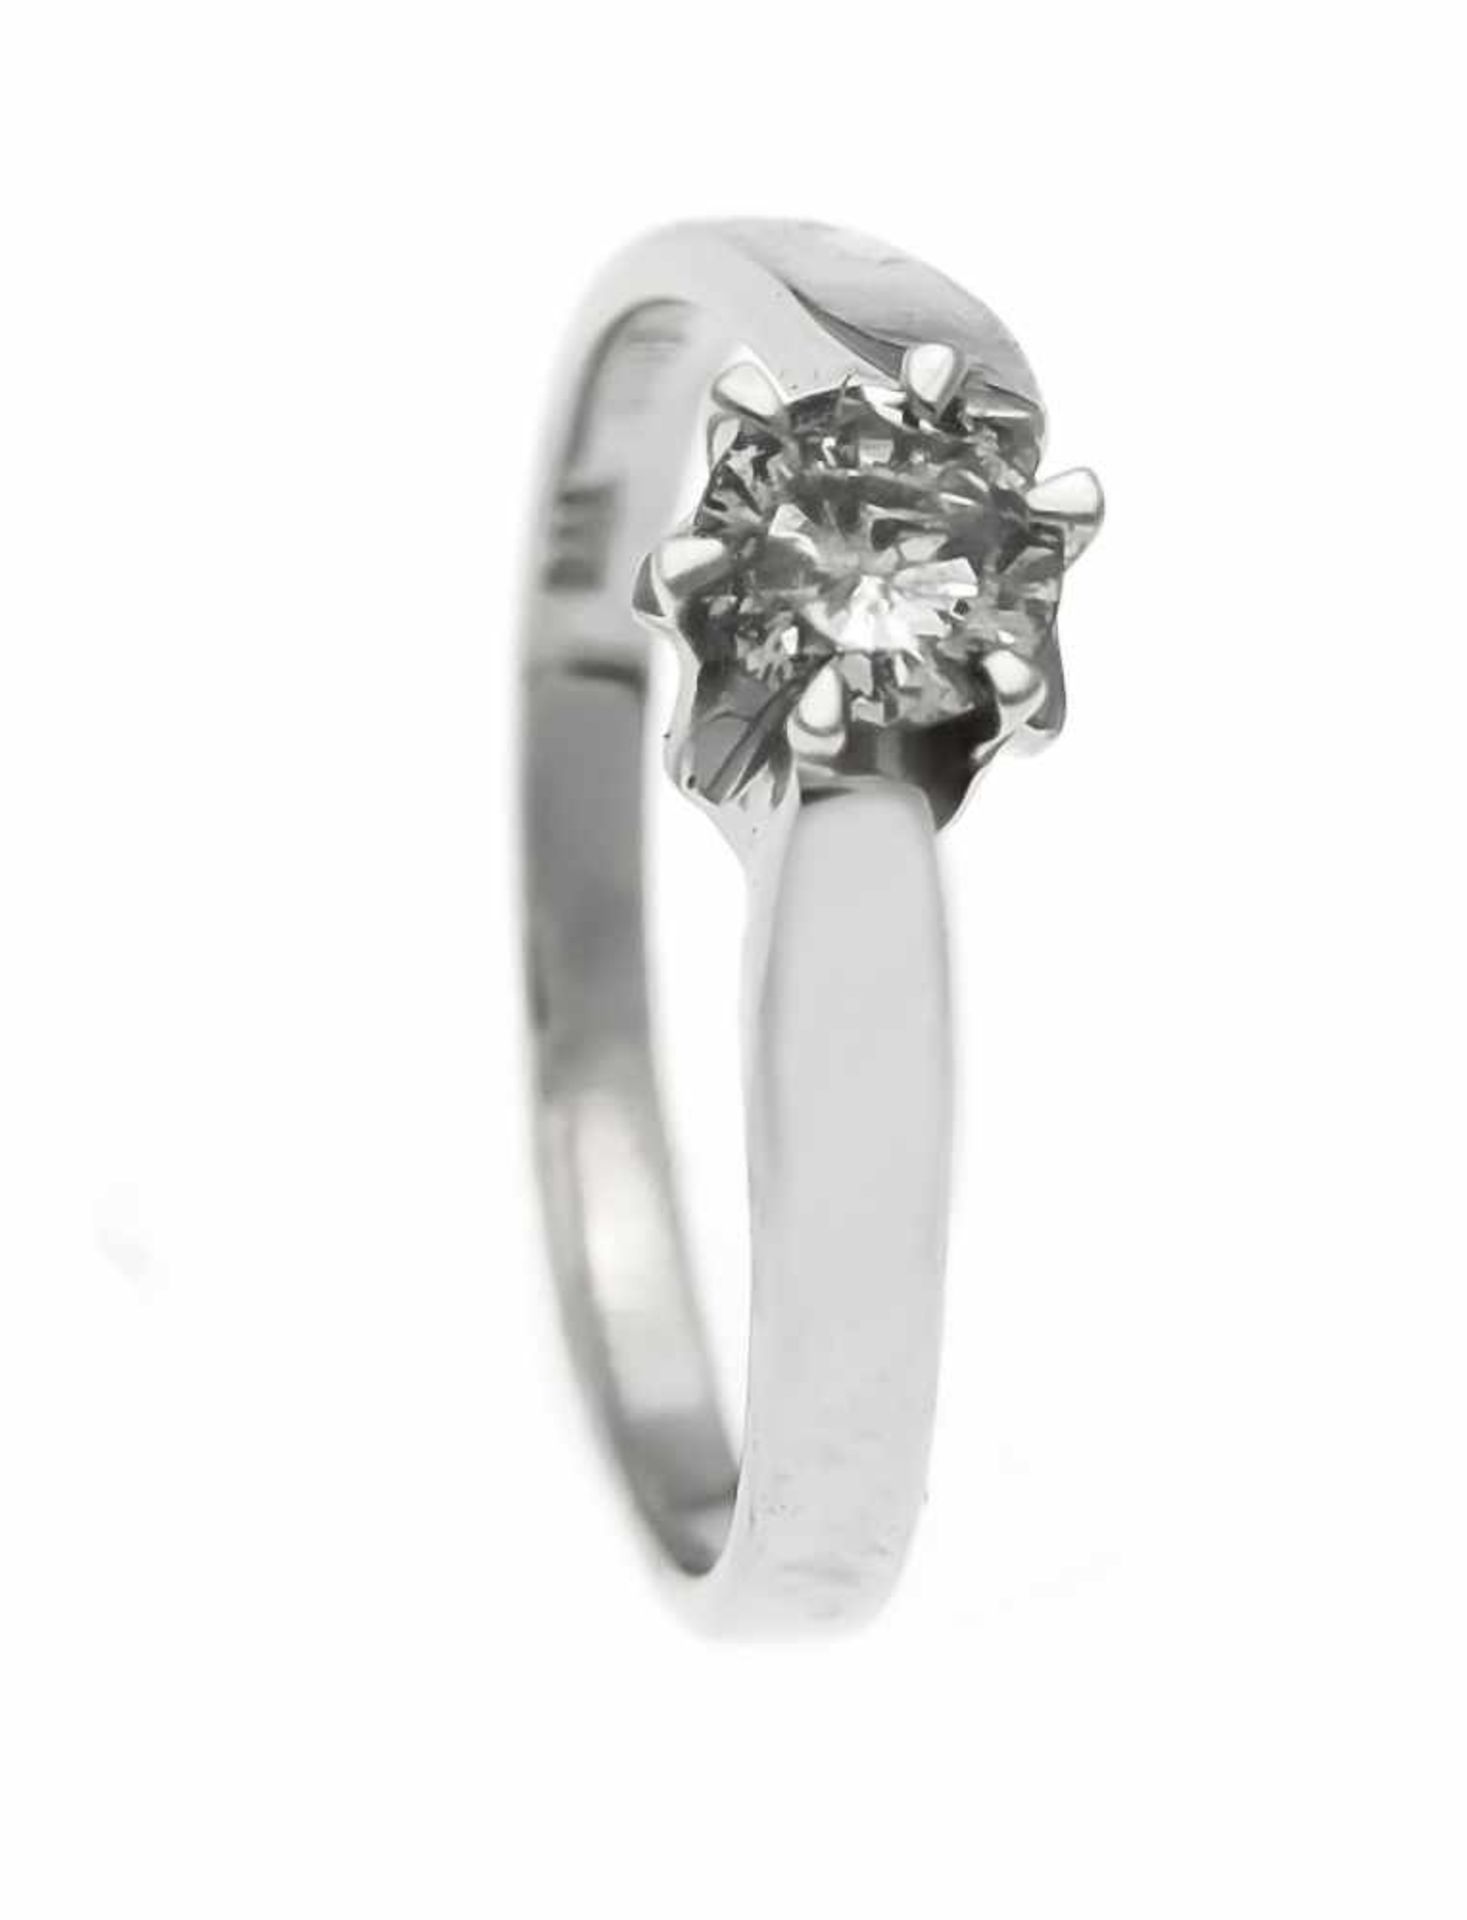 Brillant-Ring WG 585/000 mit einem Brillanten 0,45 ct W/PI, RG 56, 2,5 gBrilliant ring WG 585/000